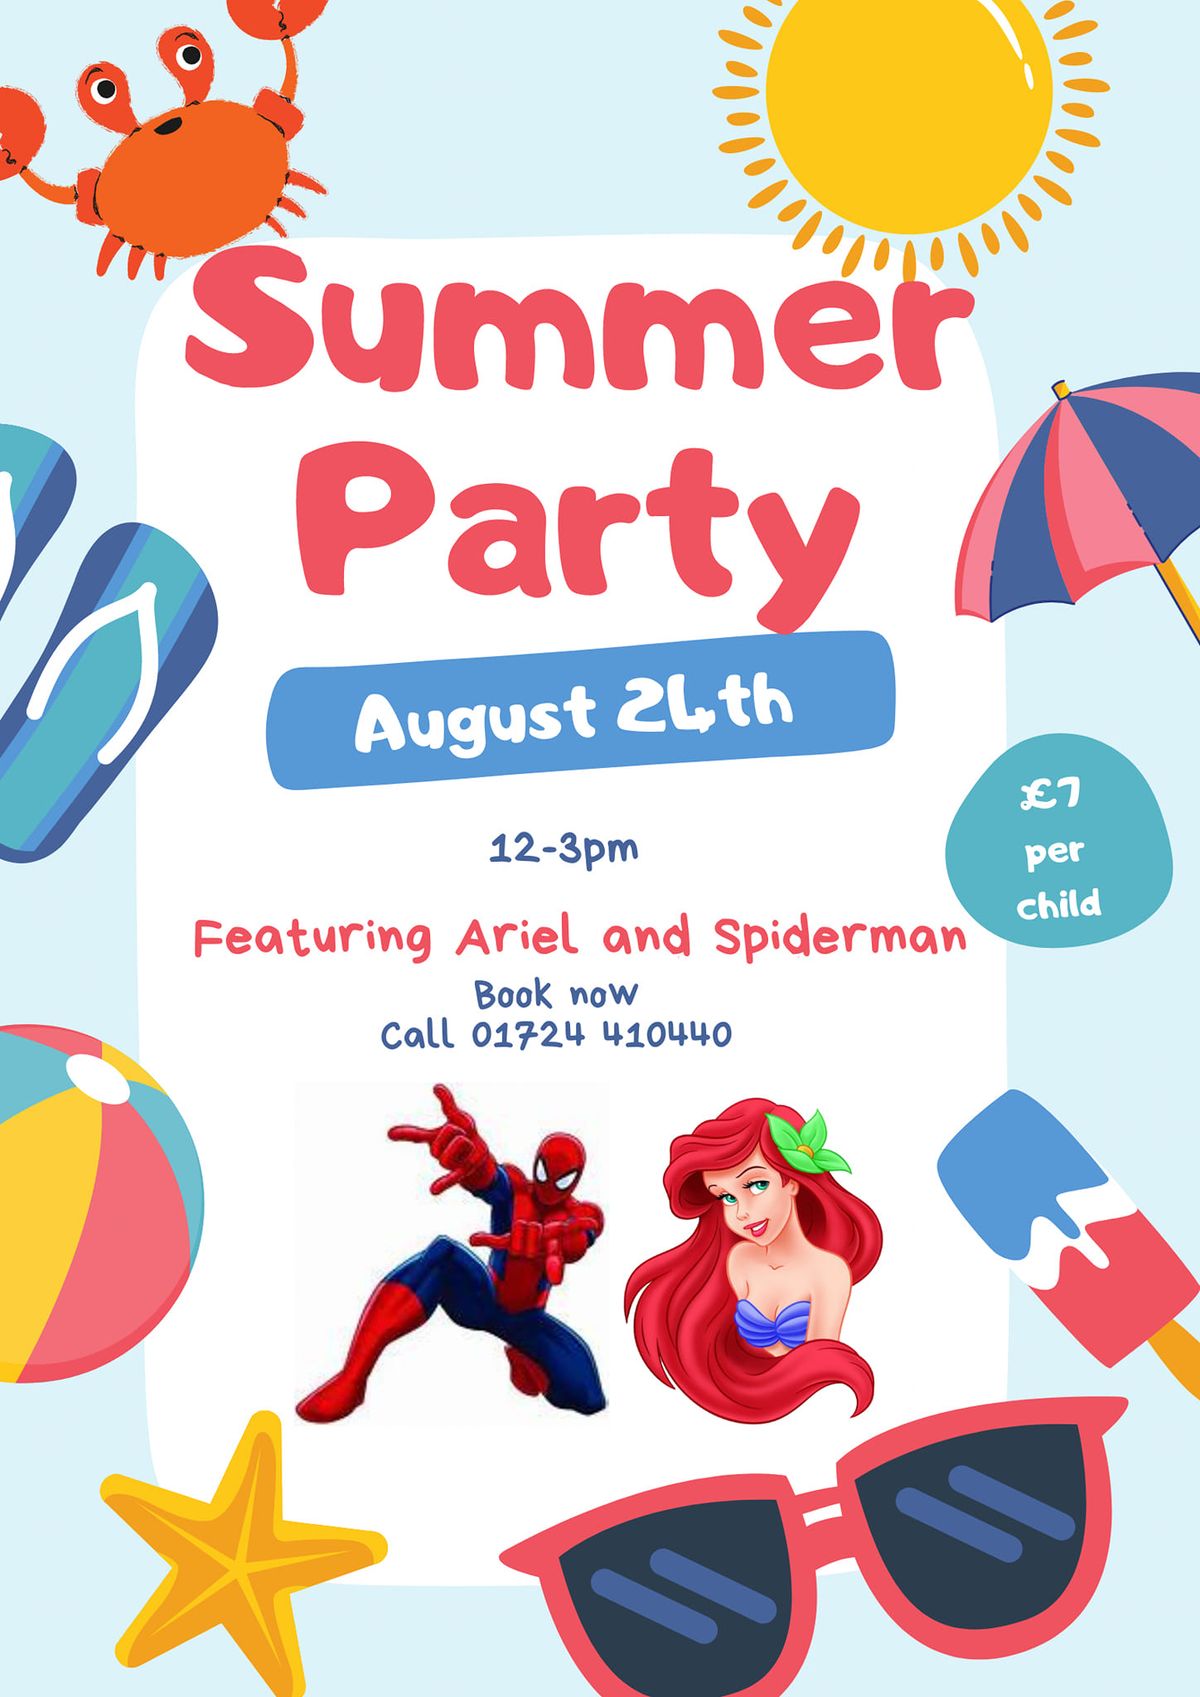 Summer Party- Featuring Ariel and Spiderman\ud83d\udd78\ud83e\udddc\u200d\u2640\ufe0f